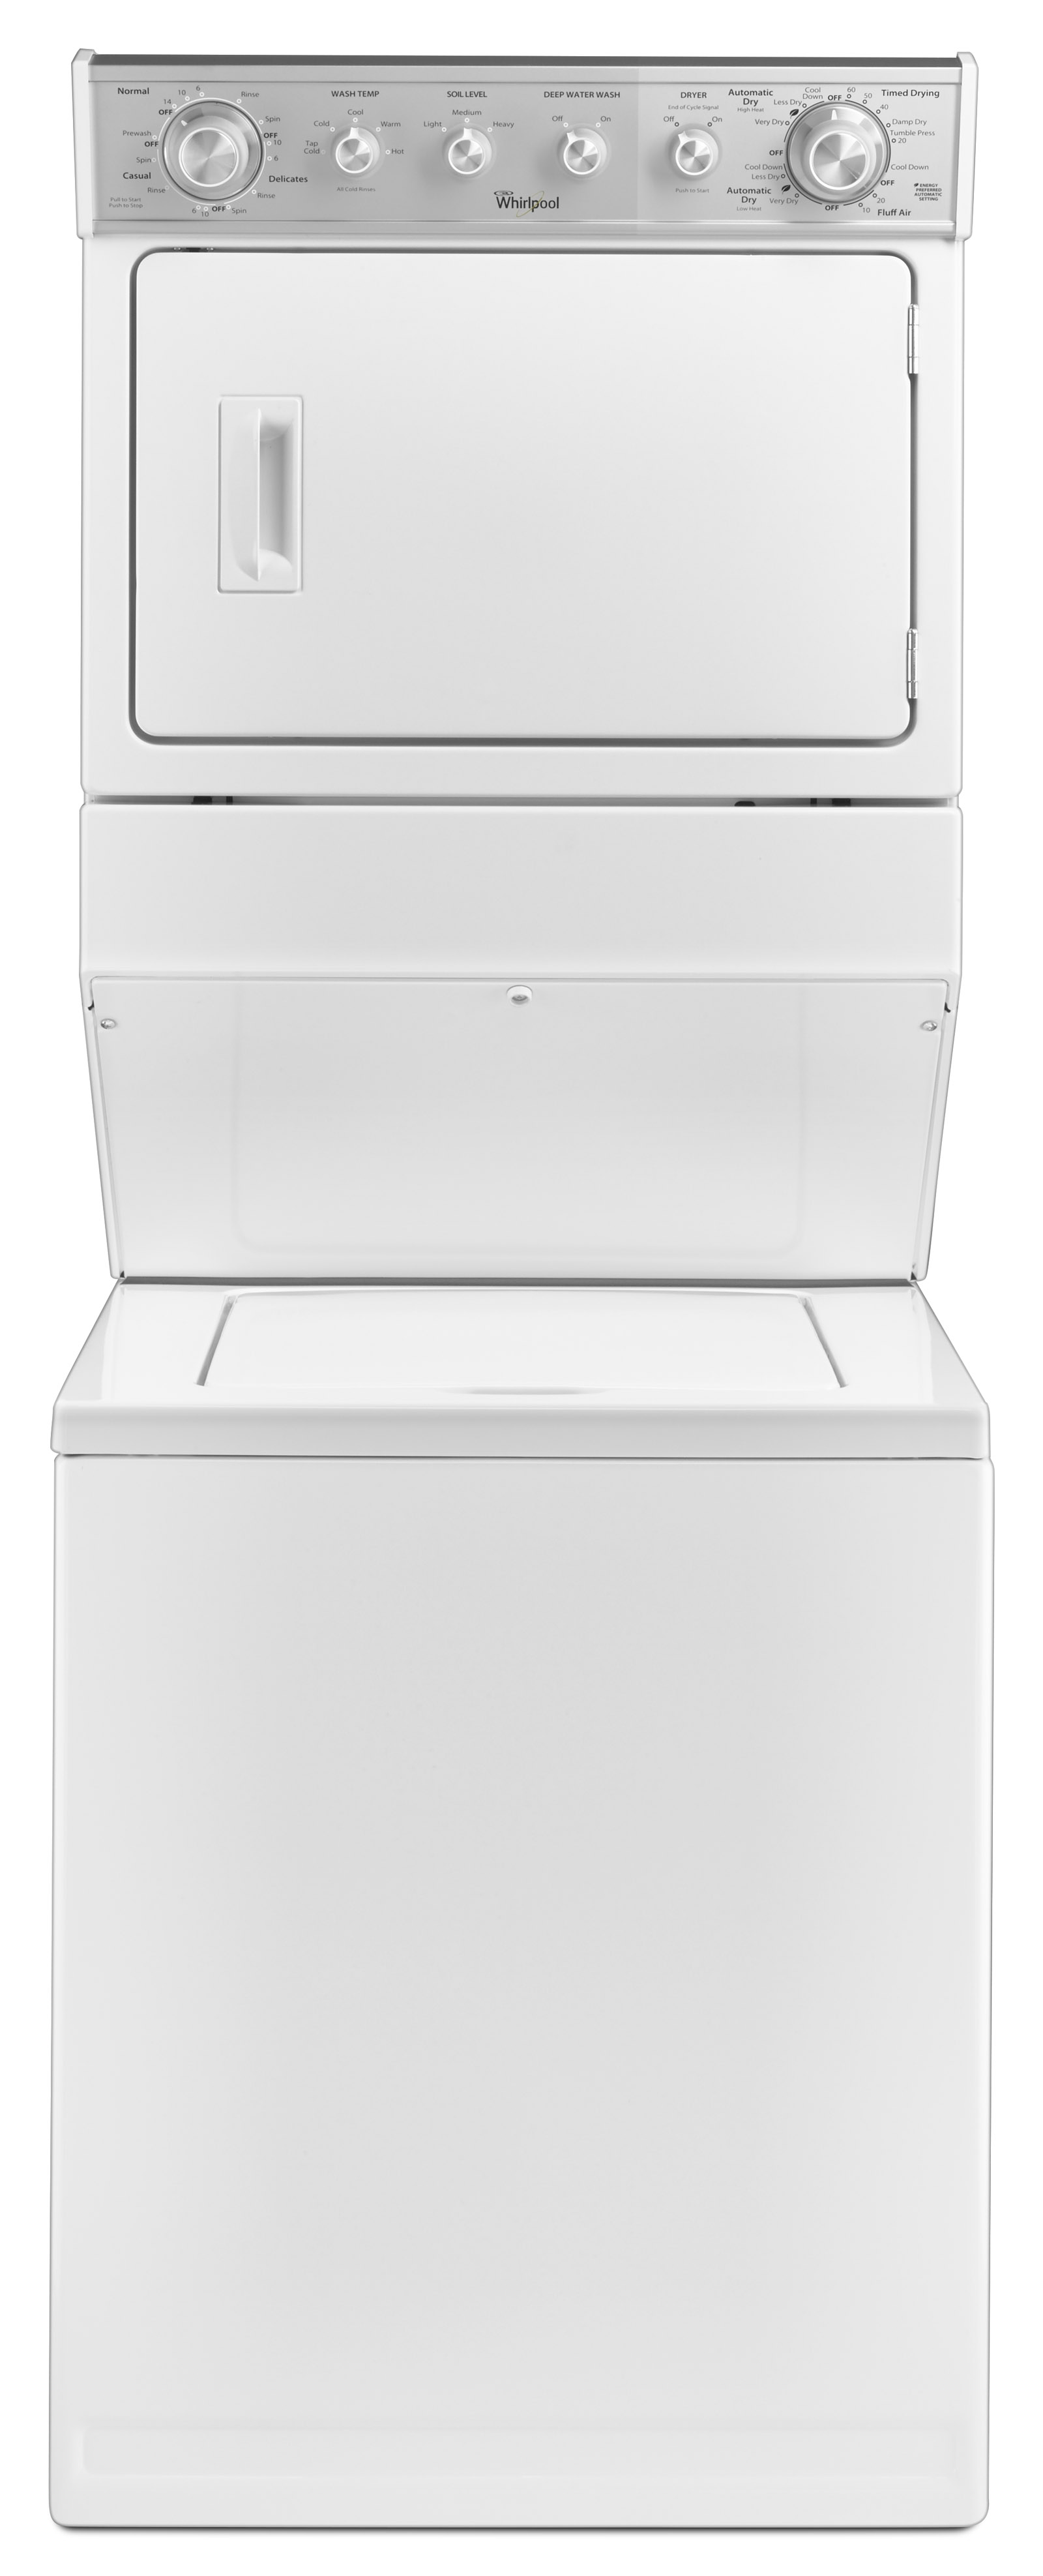 Washer/Dryer logo